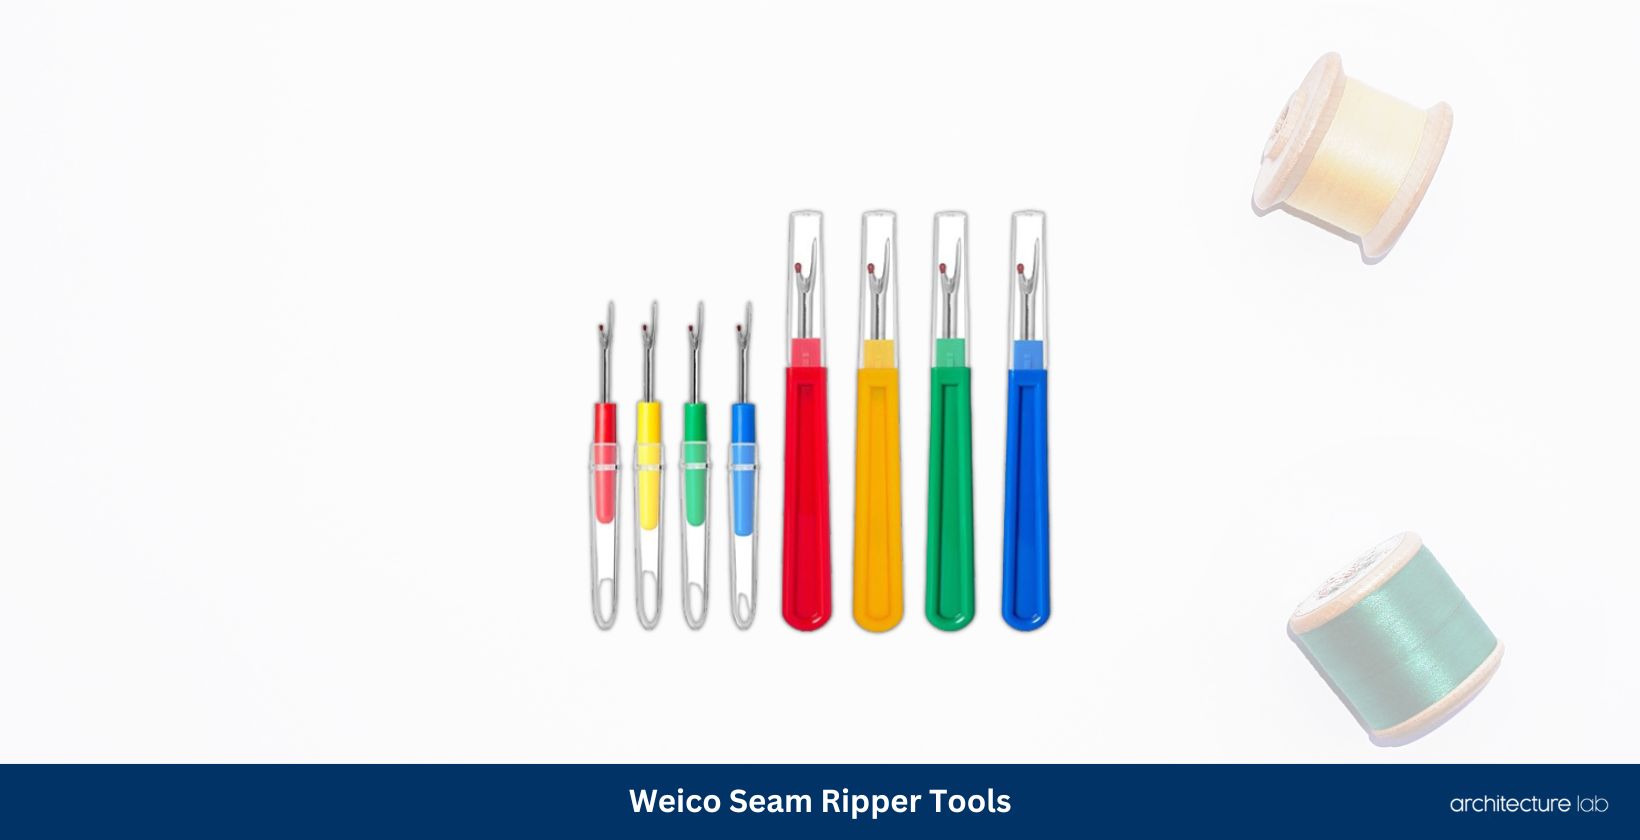 Weico seam ripper tools